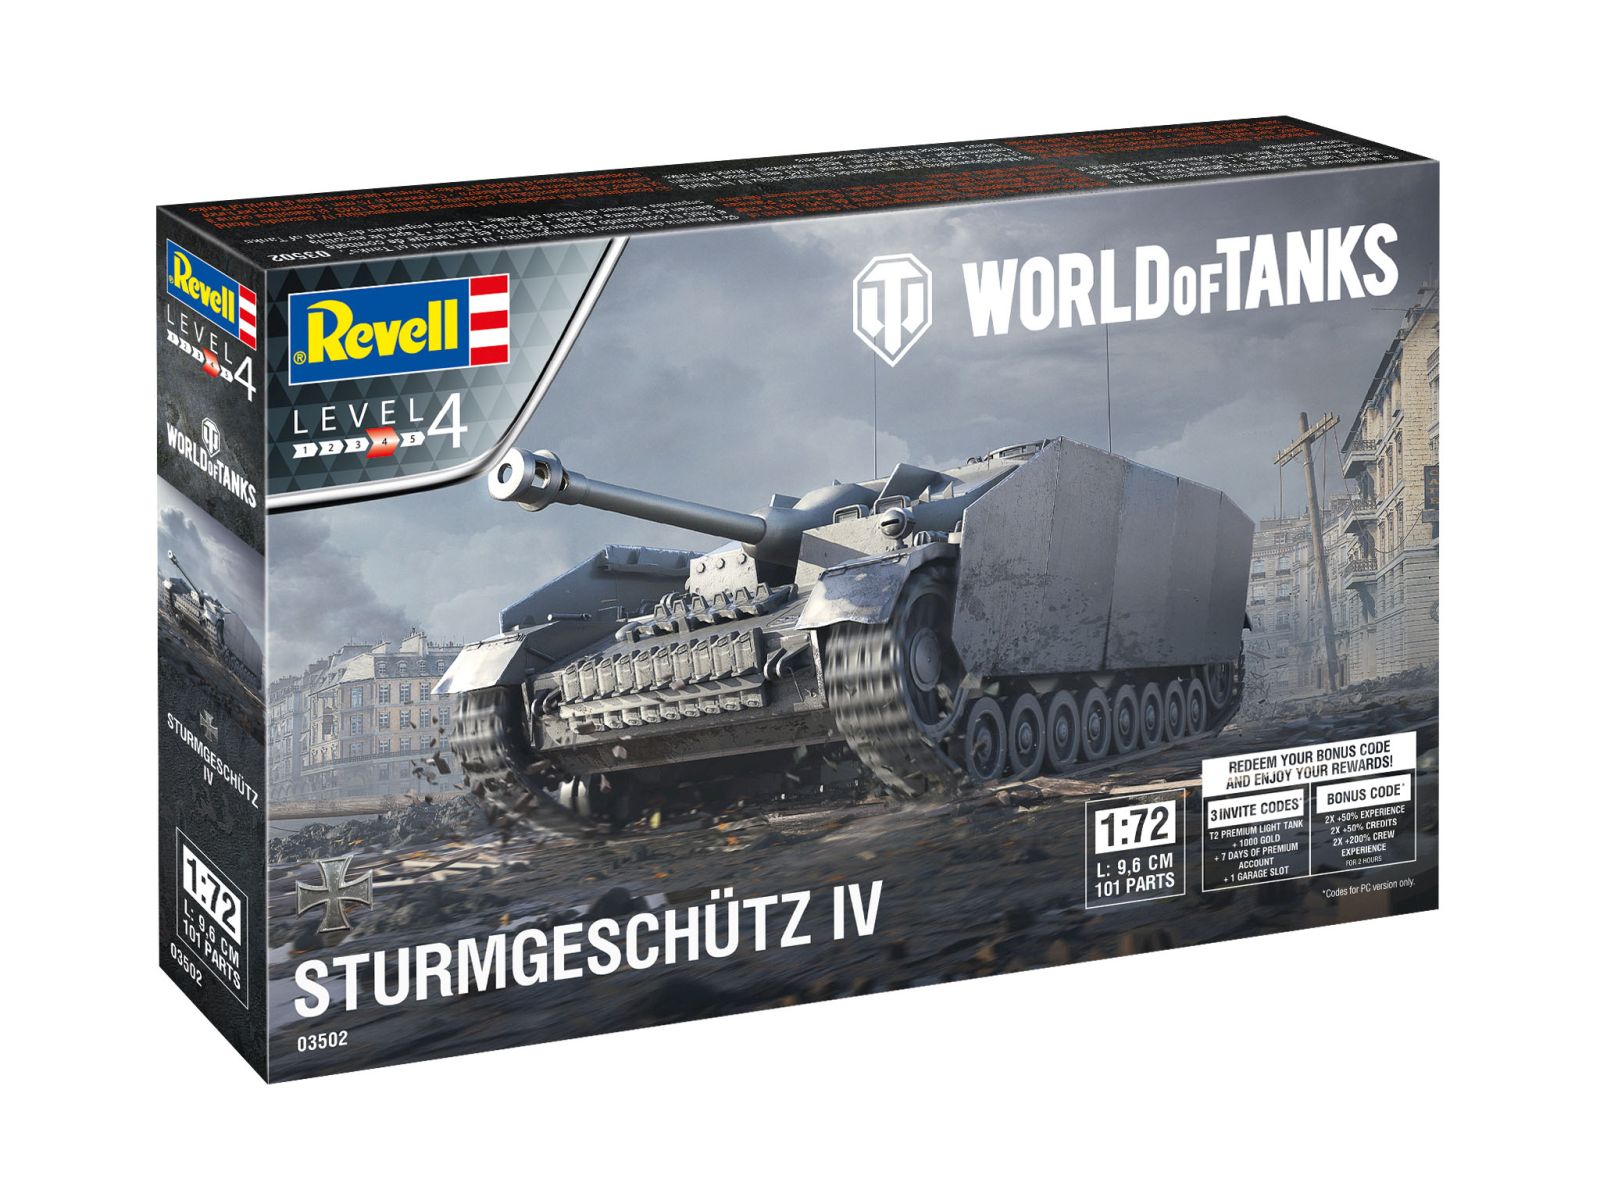 Revell 03502 - Sturmgeschütz IV "World of Tanks"